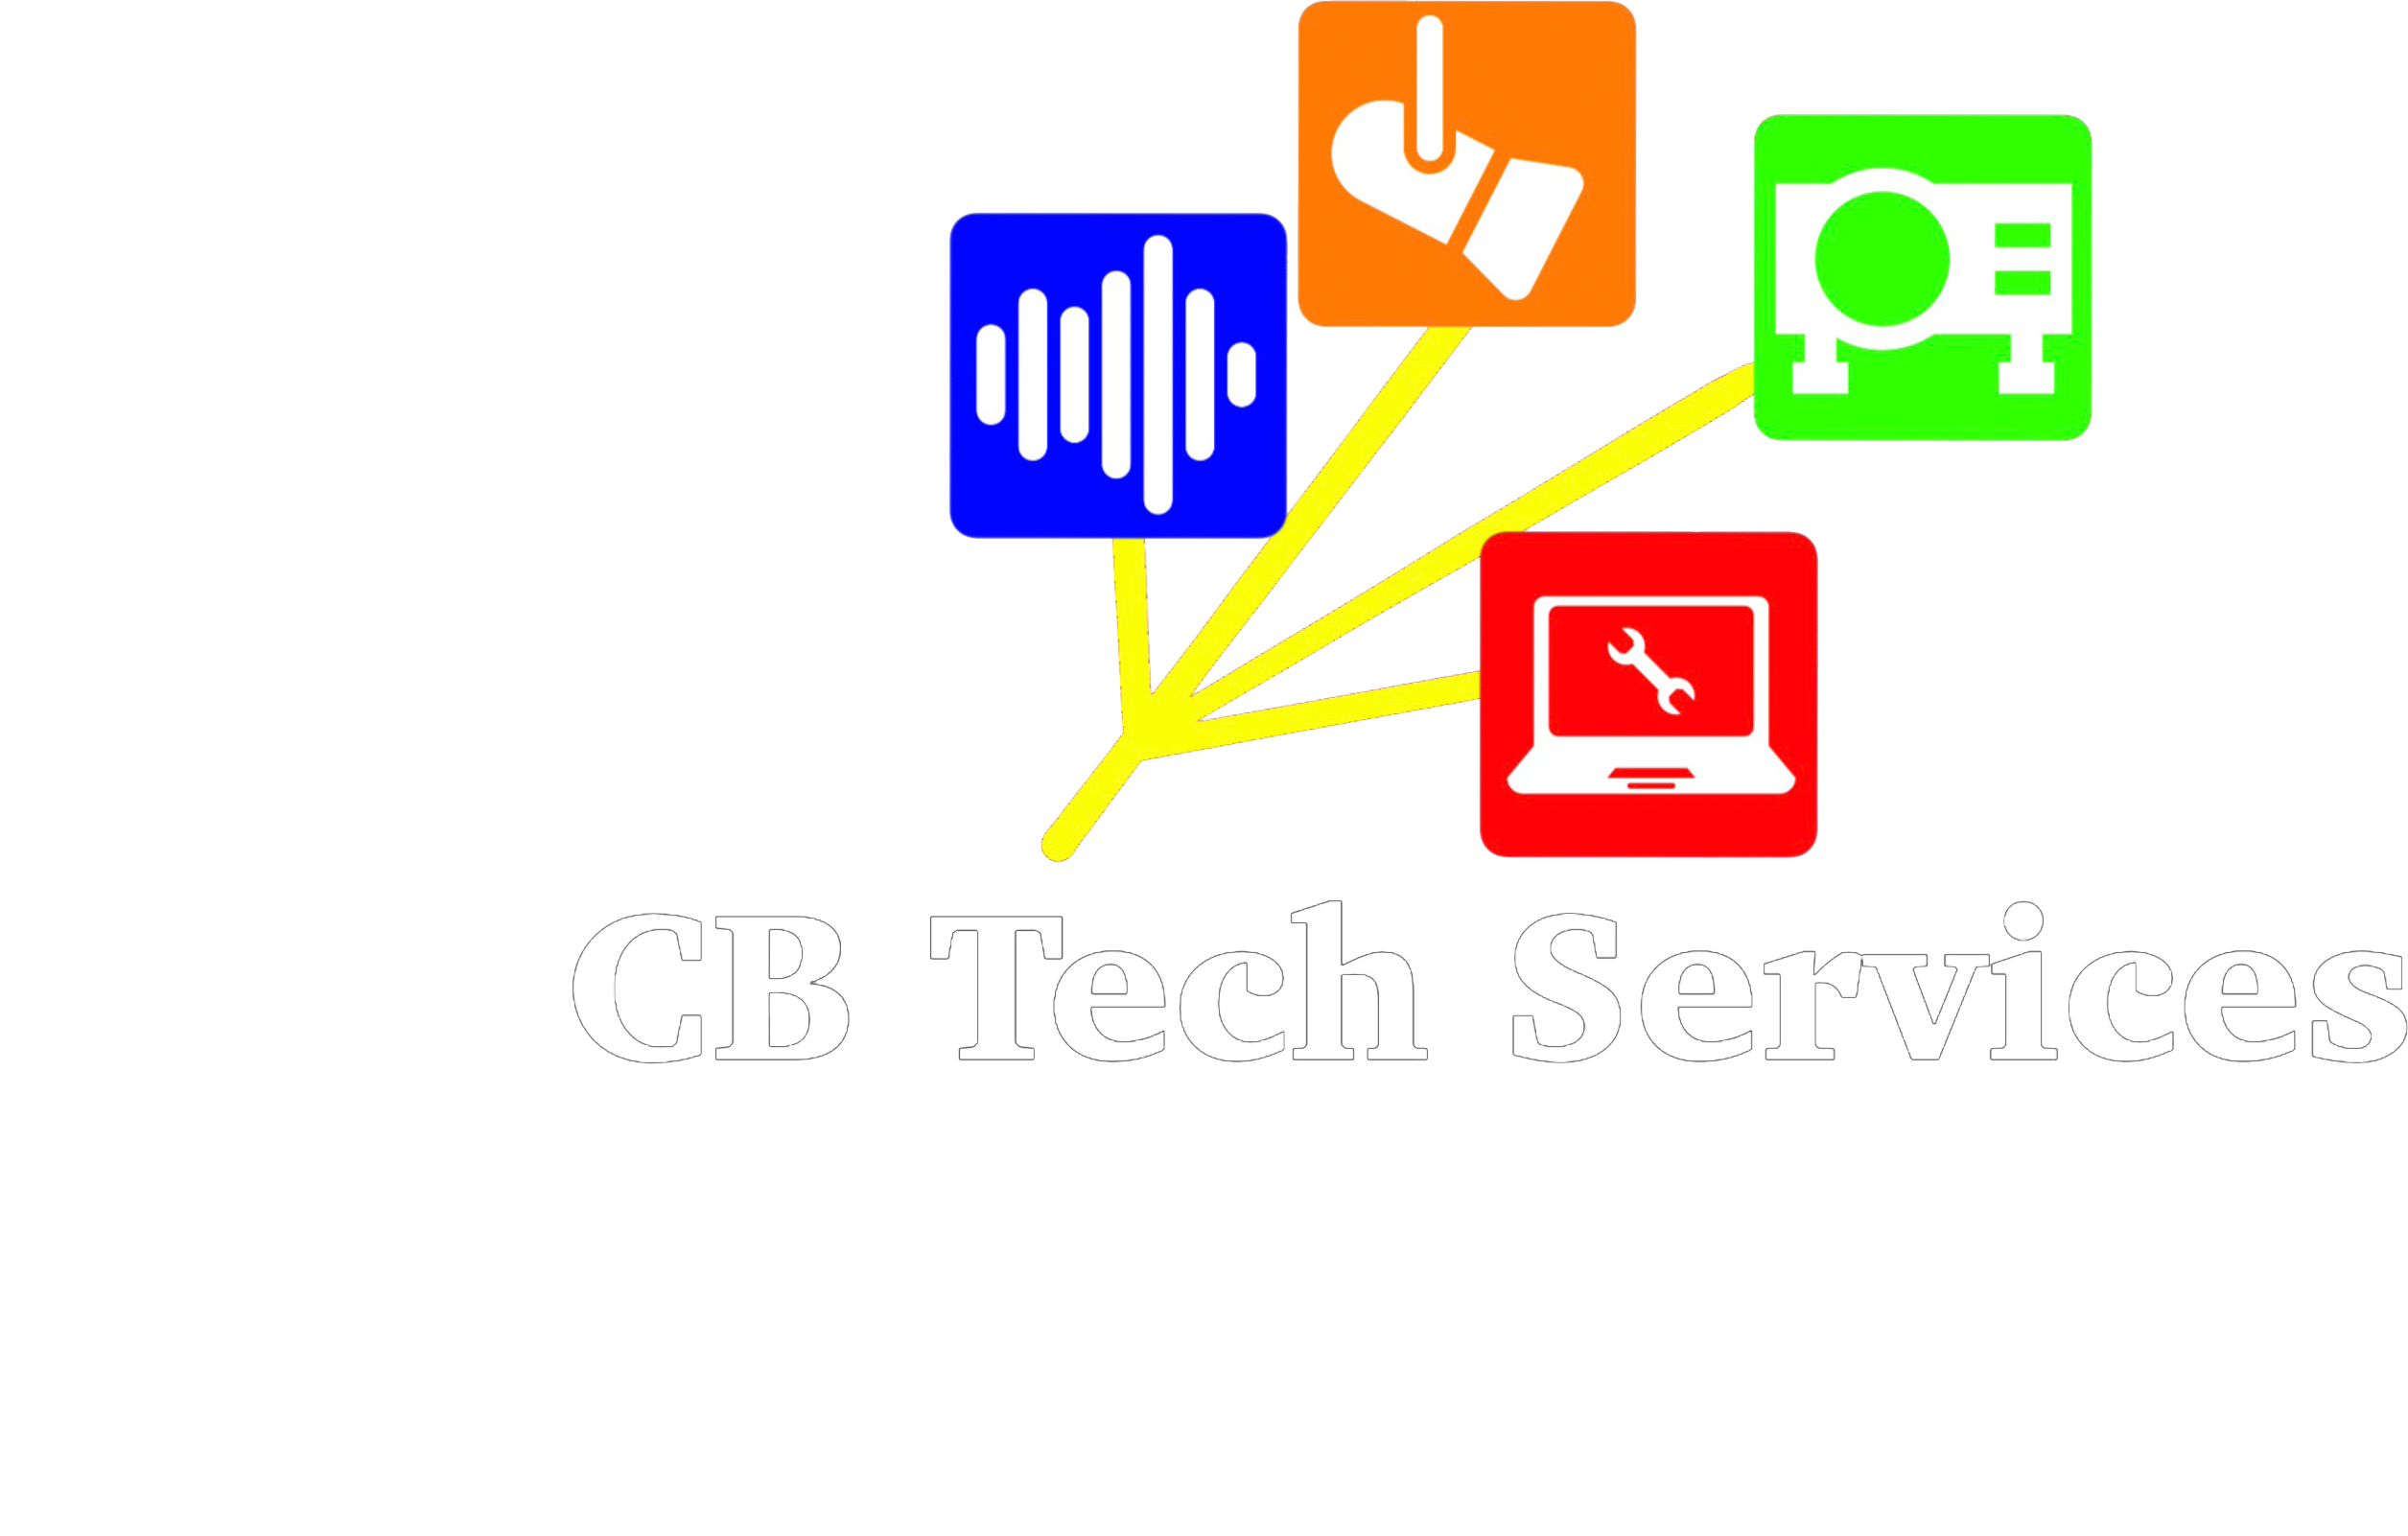 CB Tech Services